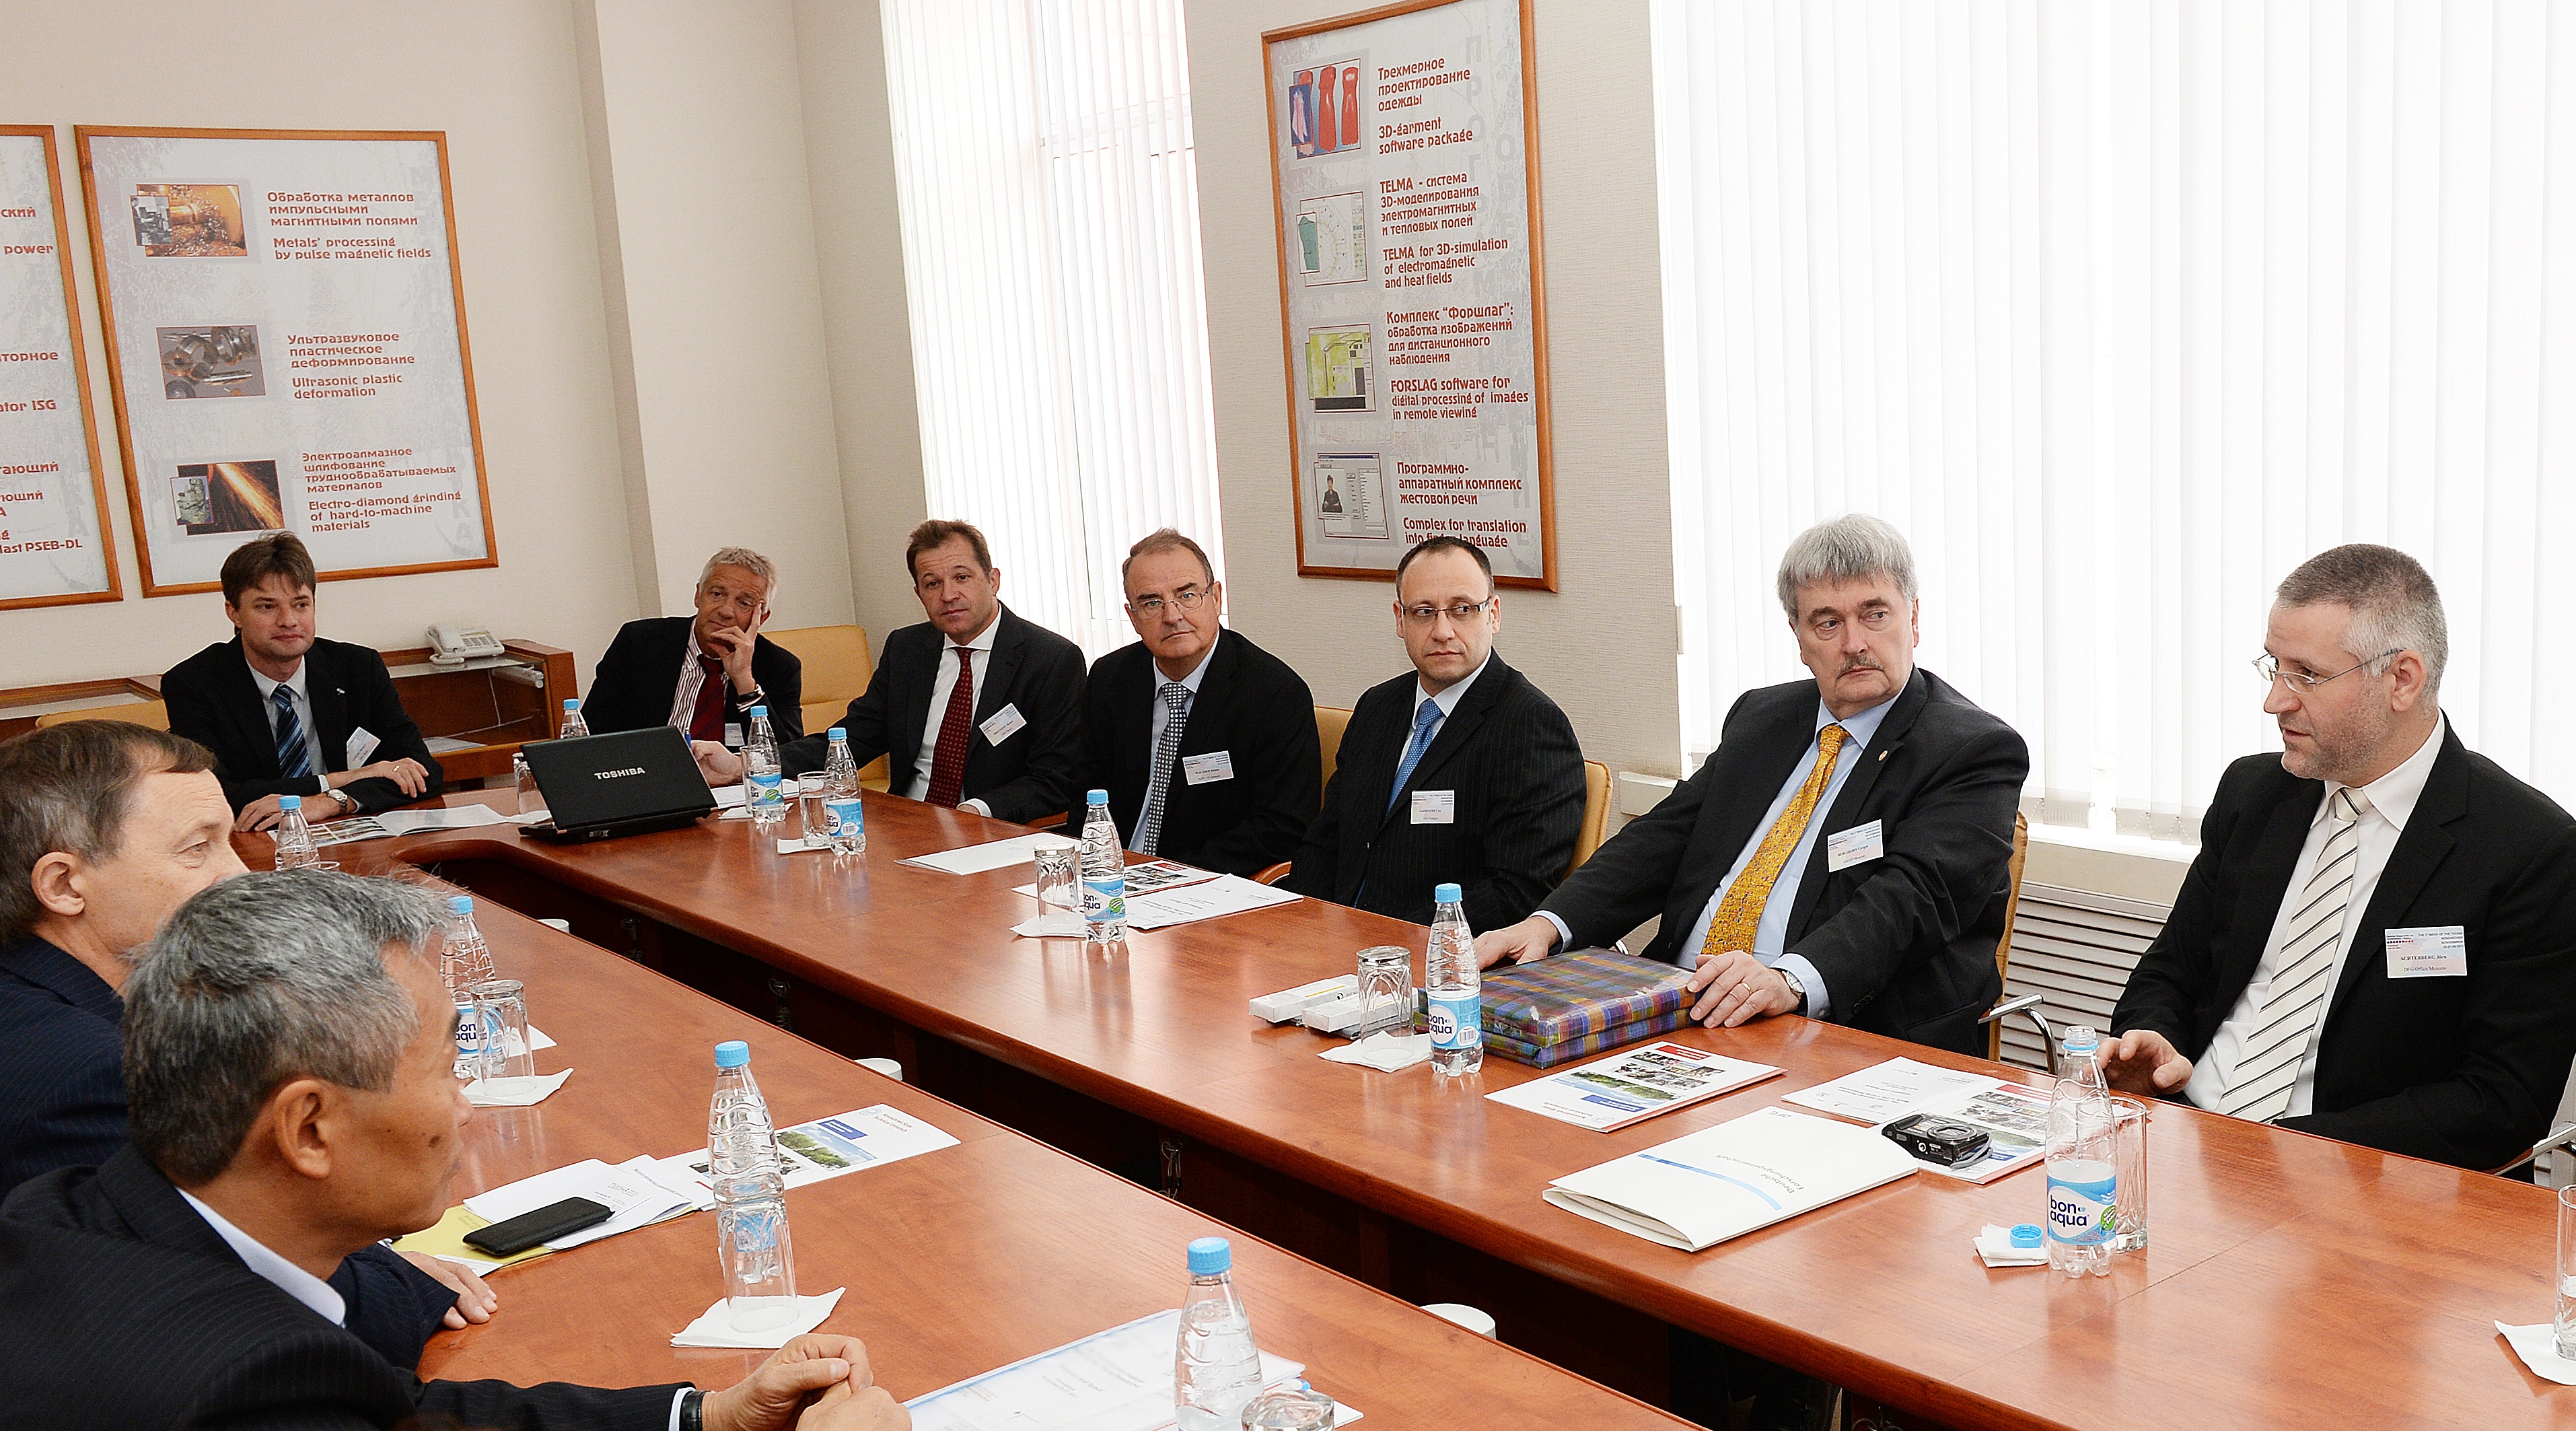 Discussion in the vice-chancellor's office. L to R: W. Schröder (RWTH Aachen University), J. Breitkopf (DFG Bonn), R. Walther (MTU Aero Engines, Munich), U. Gaisbauer (Technical University of Stuttgart), G. Berghorn (DAAD Moscow), J. Achterberg (DFG